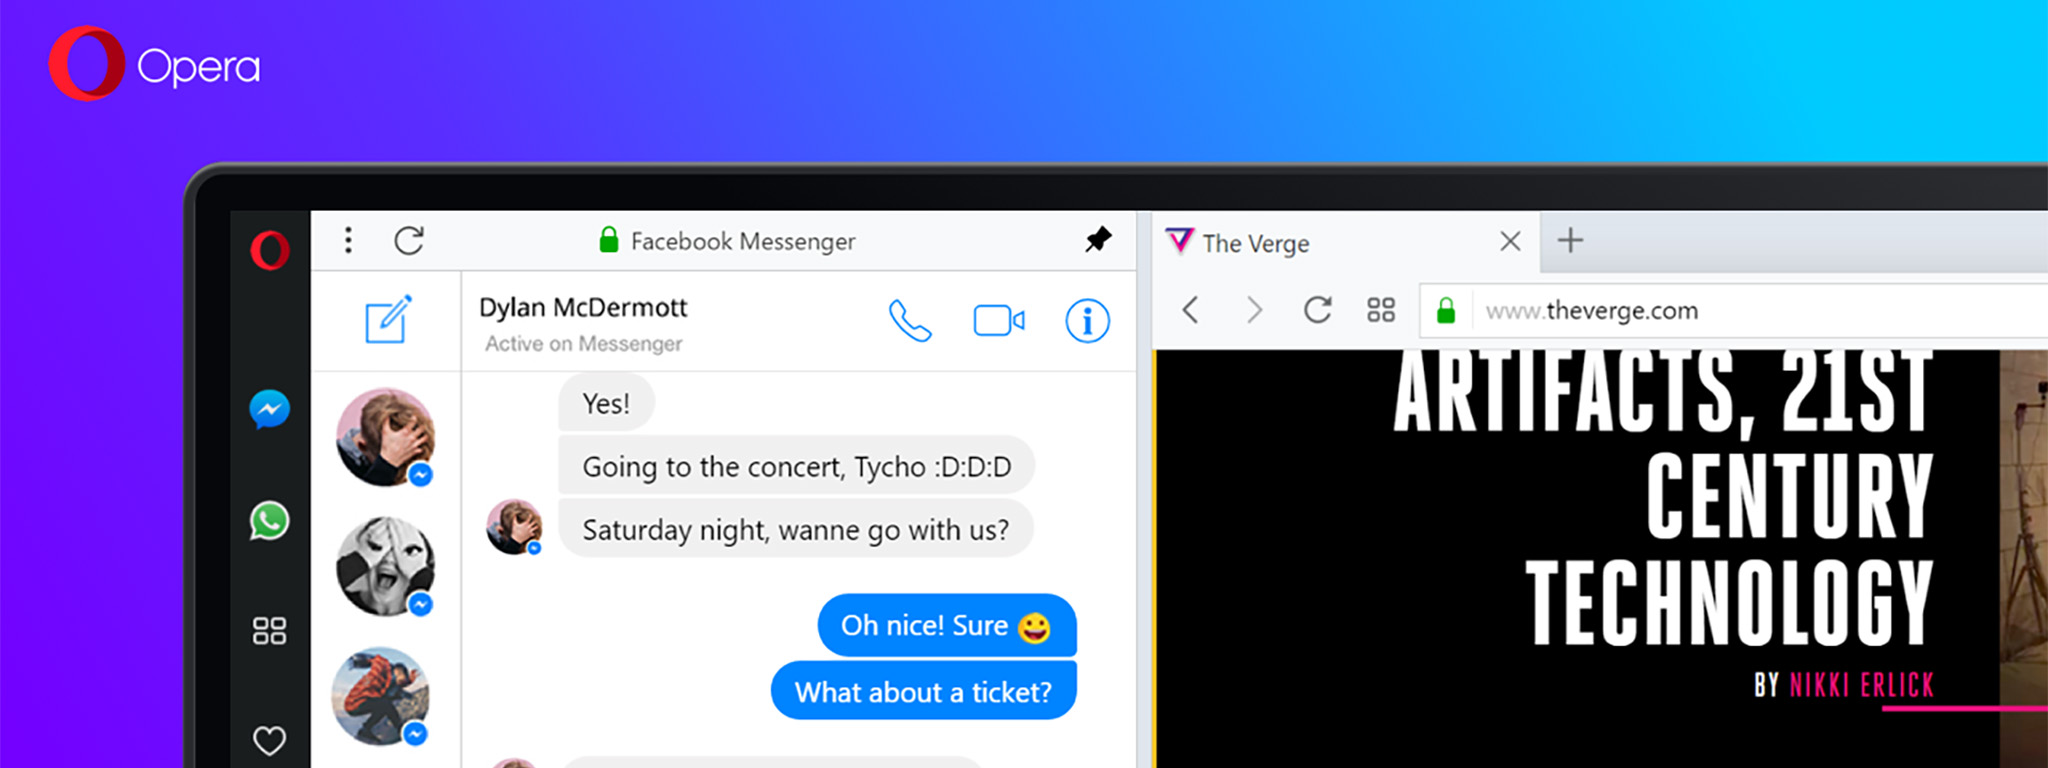 Opera Reborn: Tích hợp Messenger, WhatsApp lên sidebar, đổi giao diện, có Dark Mode